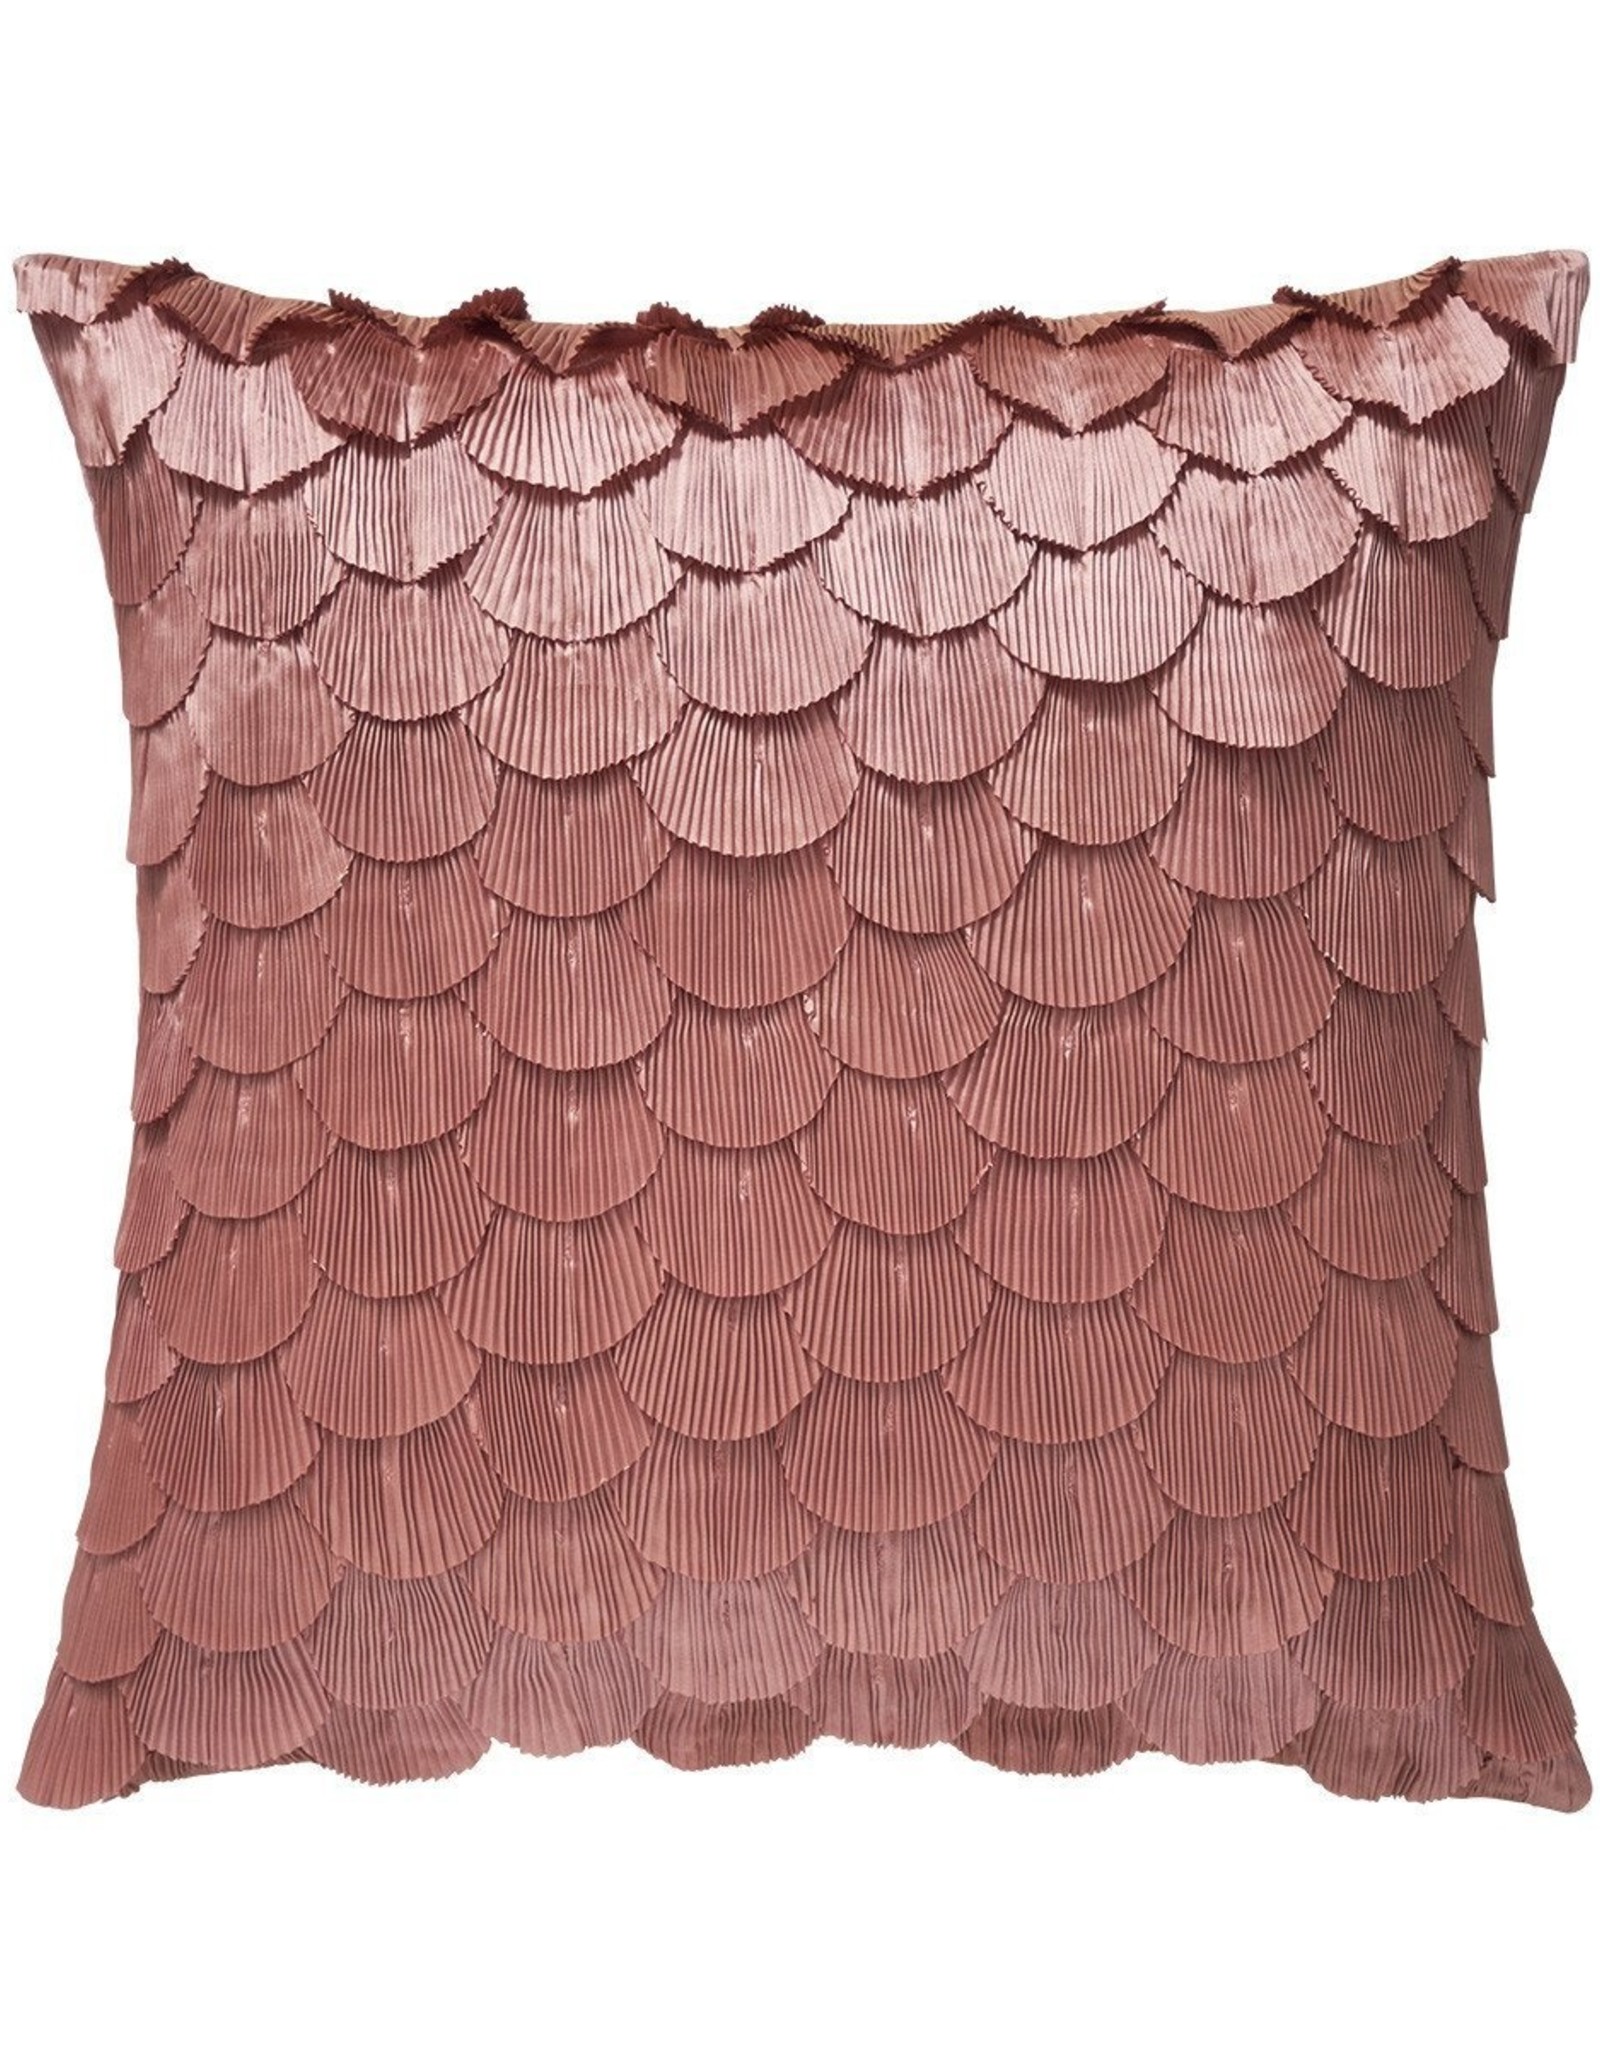 https://cdn.shoplightspeed.com/shops/621351/files/23921719/1600x2048x1/yves-delorme-ombelle-decorative-pillows.jpg